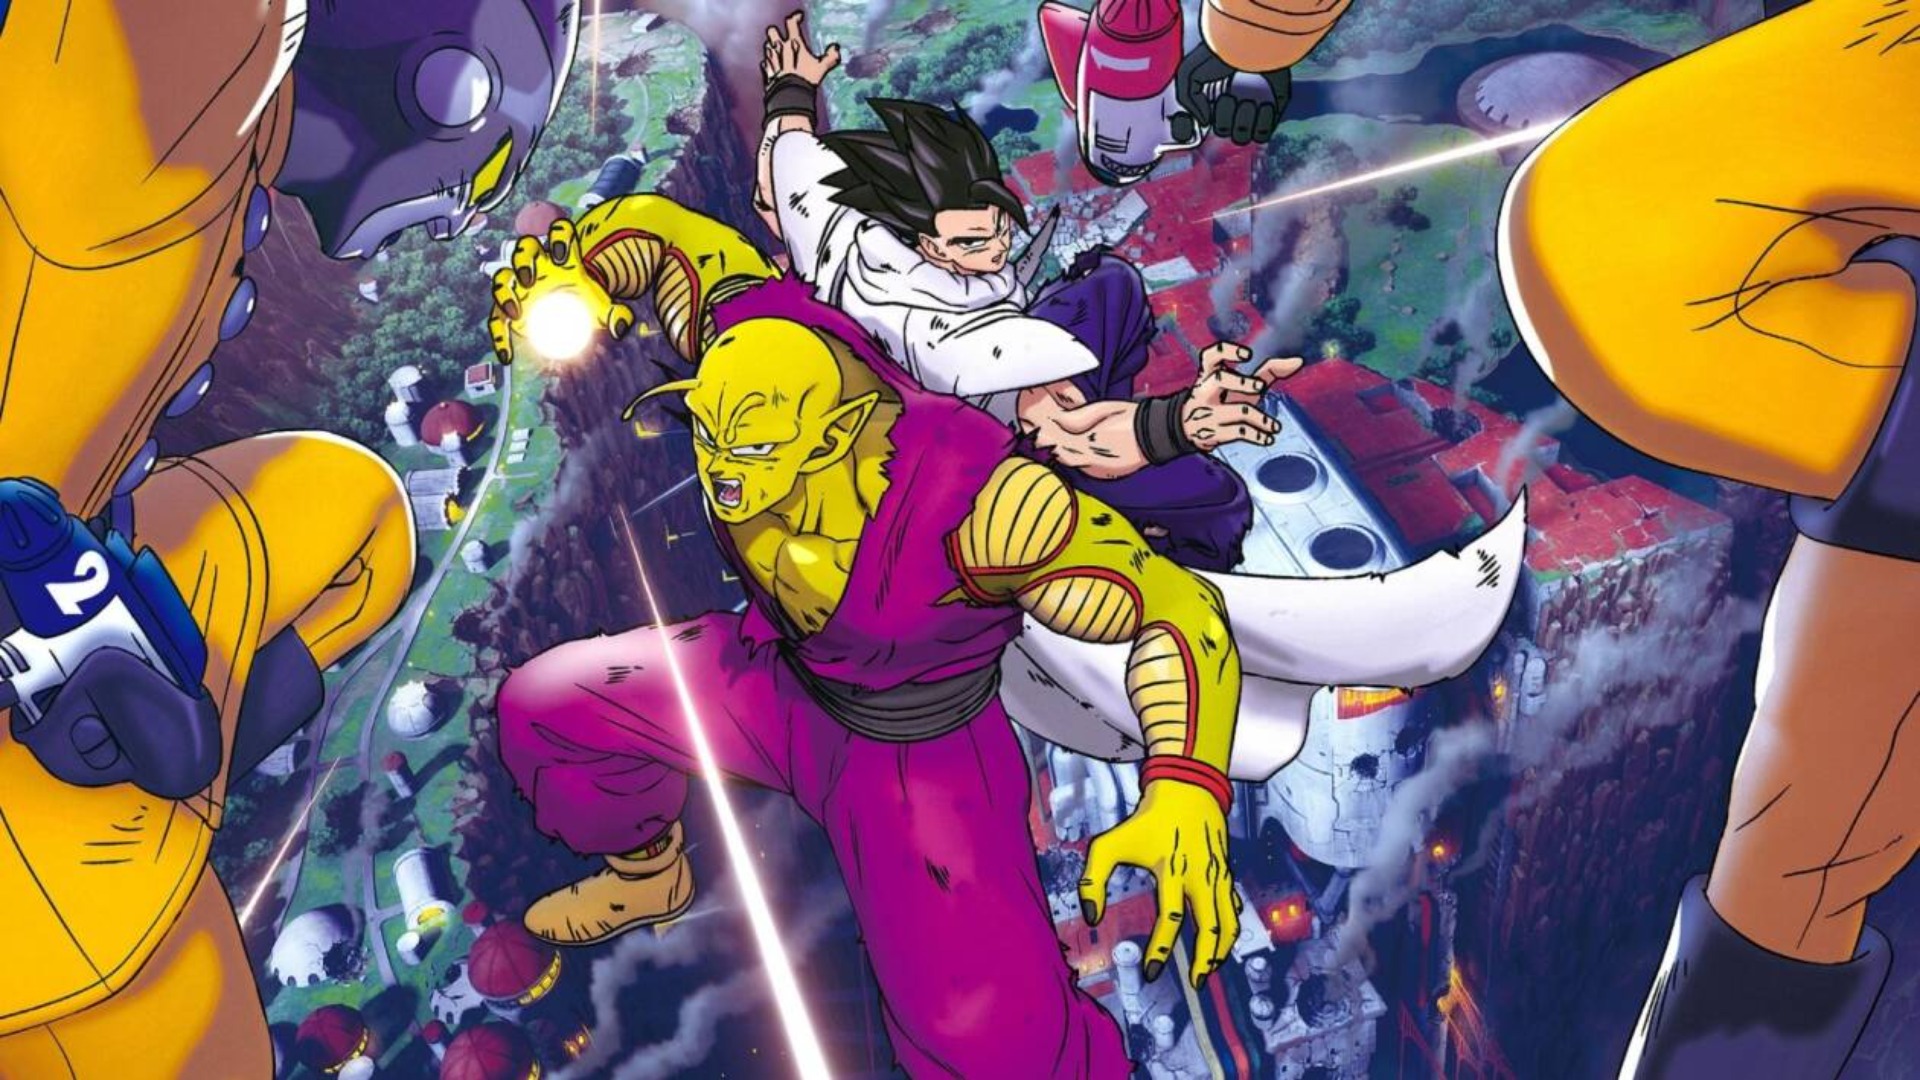 Promo encore de Piccolo et Gohan combattant Gamma 1 et 2 dans Dragon Ball Super : Super Hero.